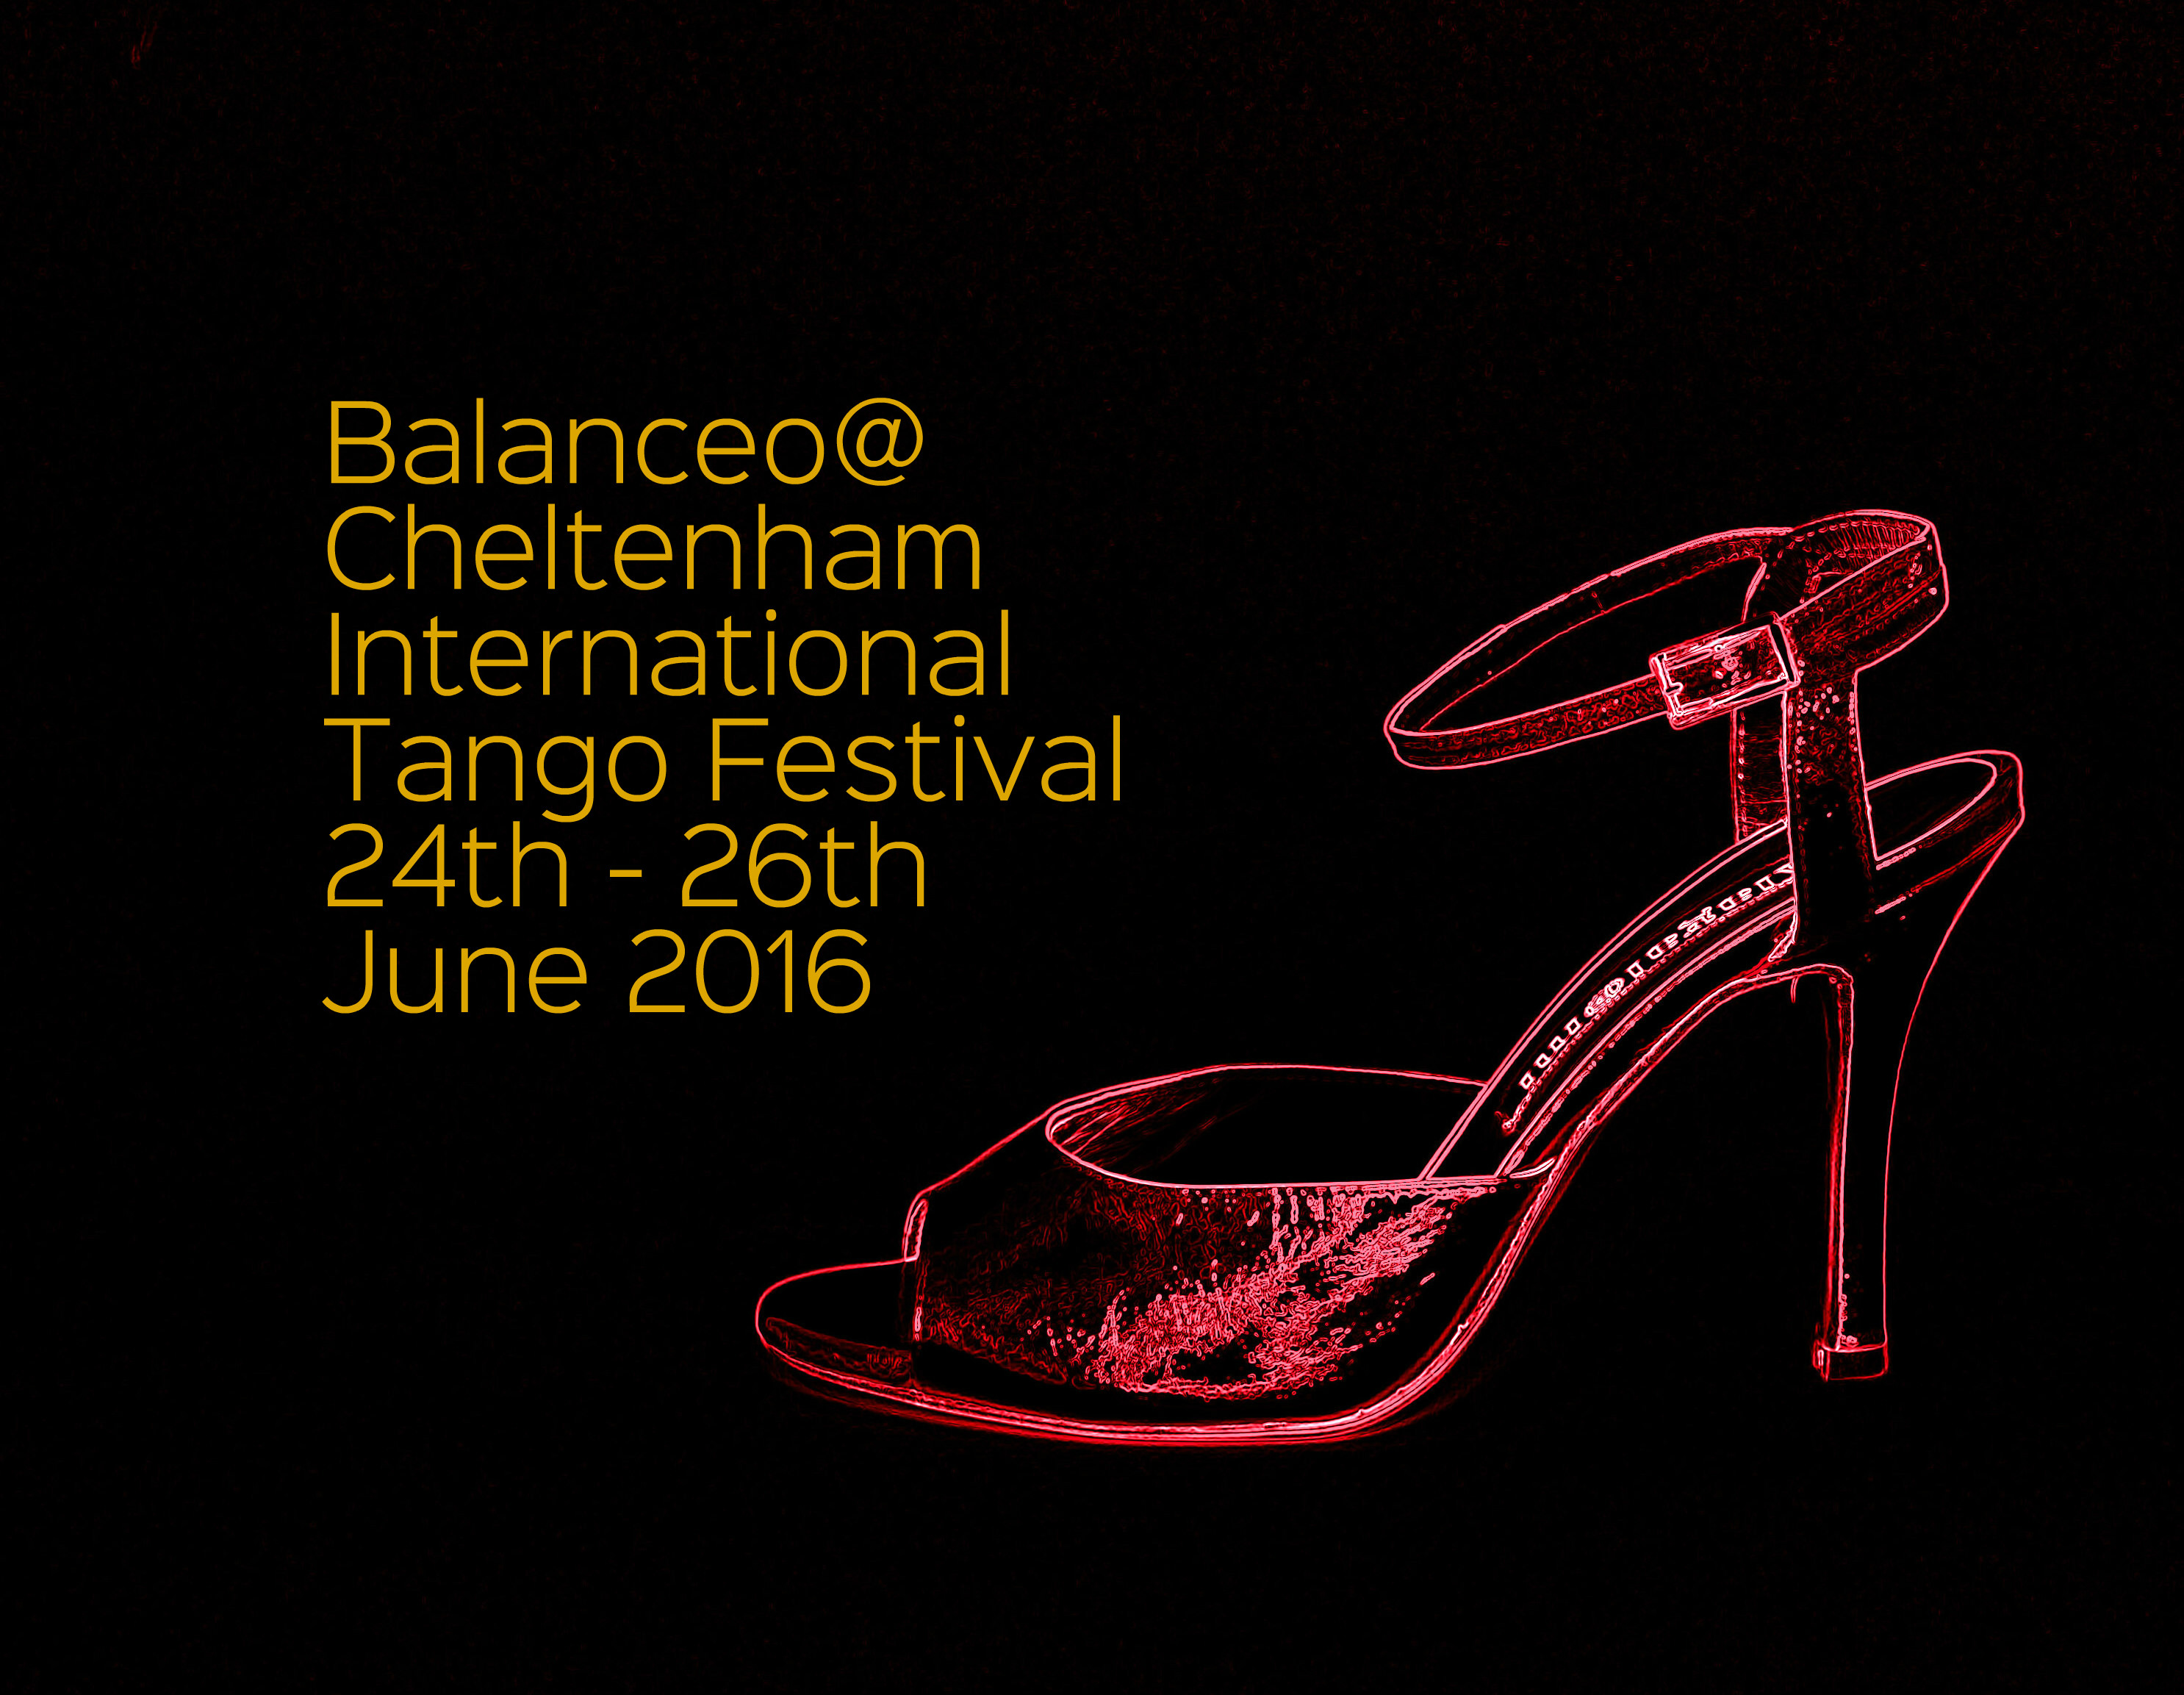 Balanceo@ Cheltenham International Tango Festival 2016